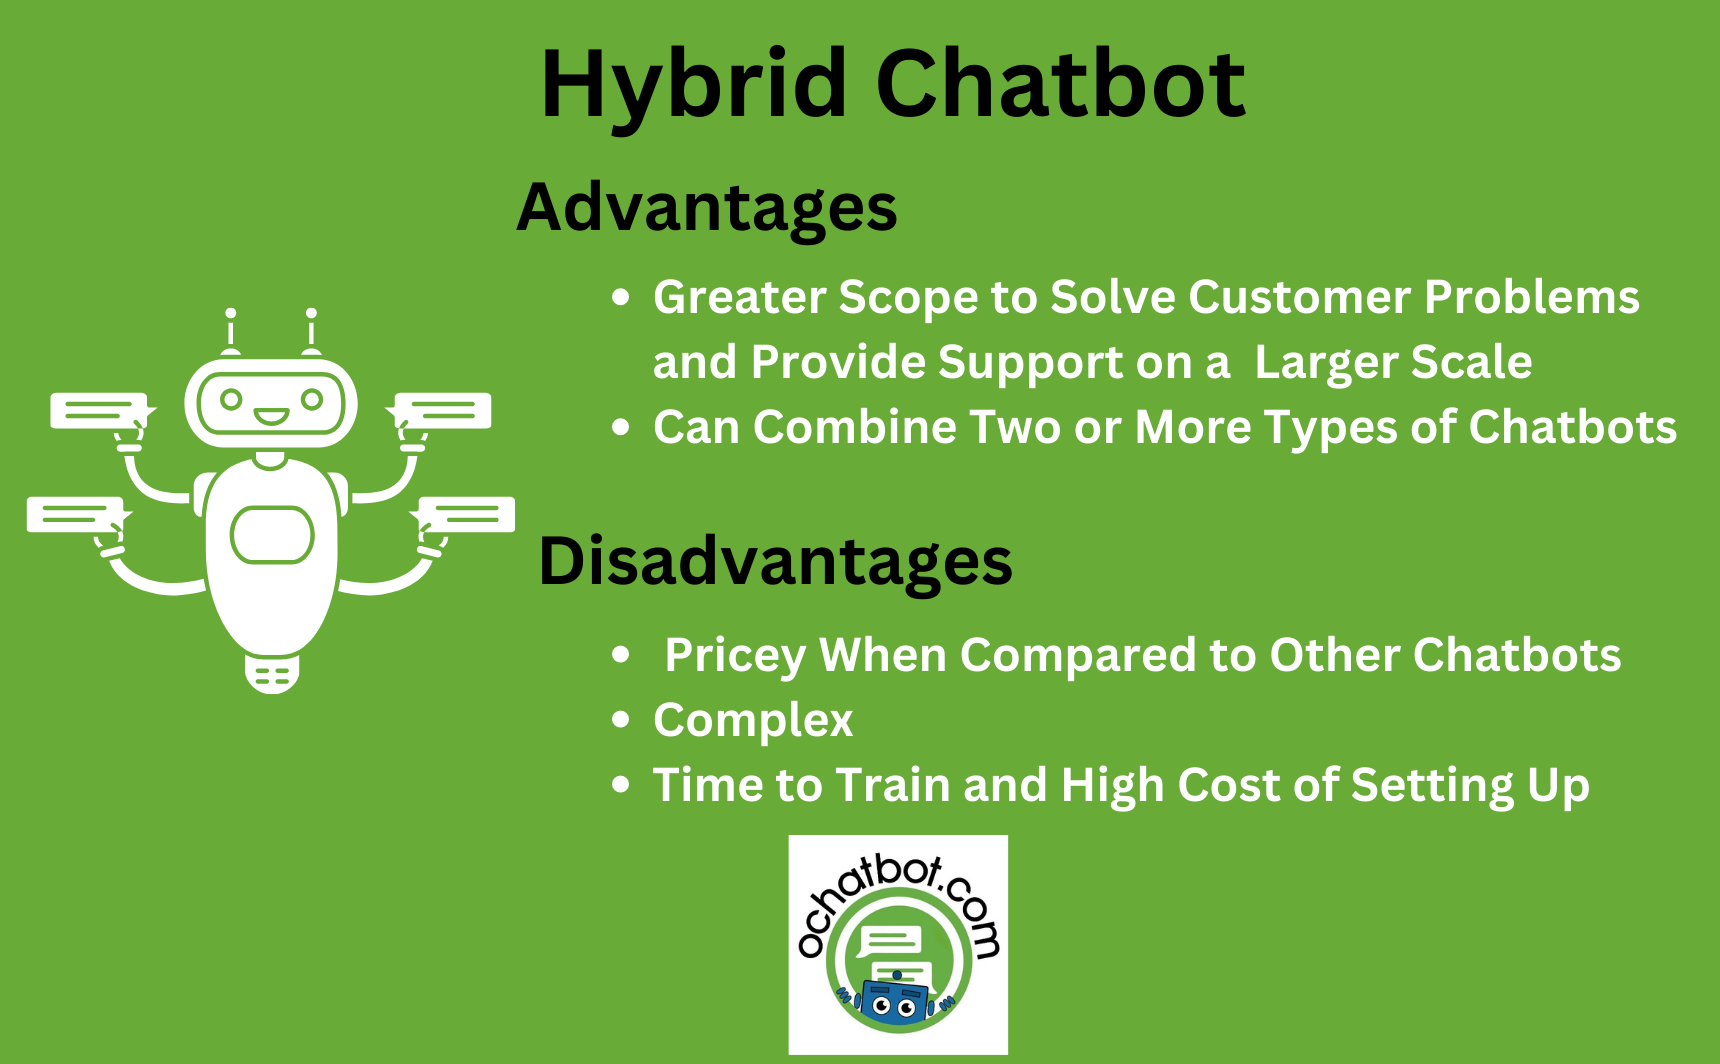 Hybrid Chatbots